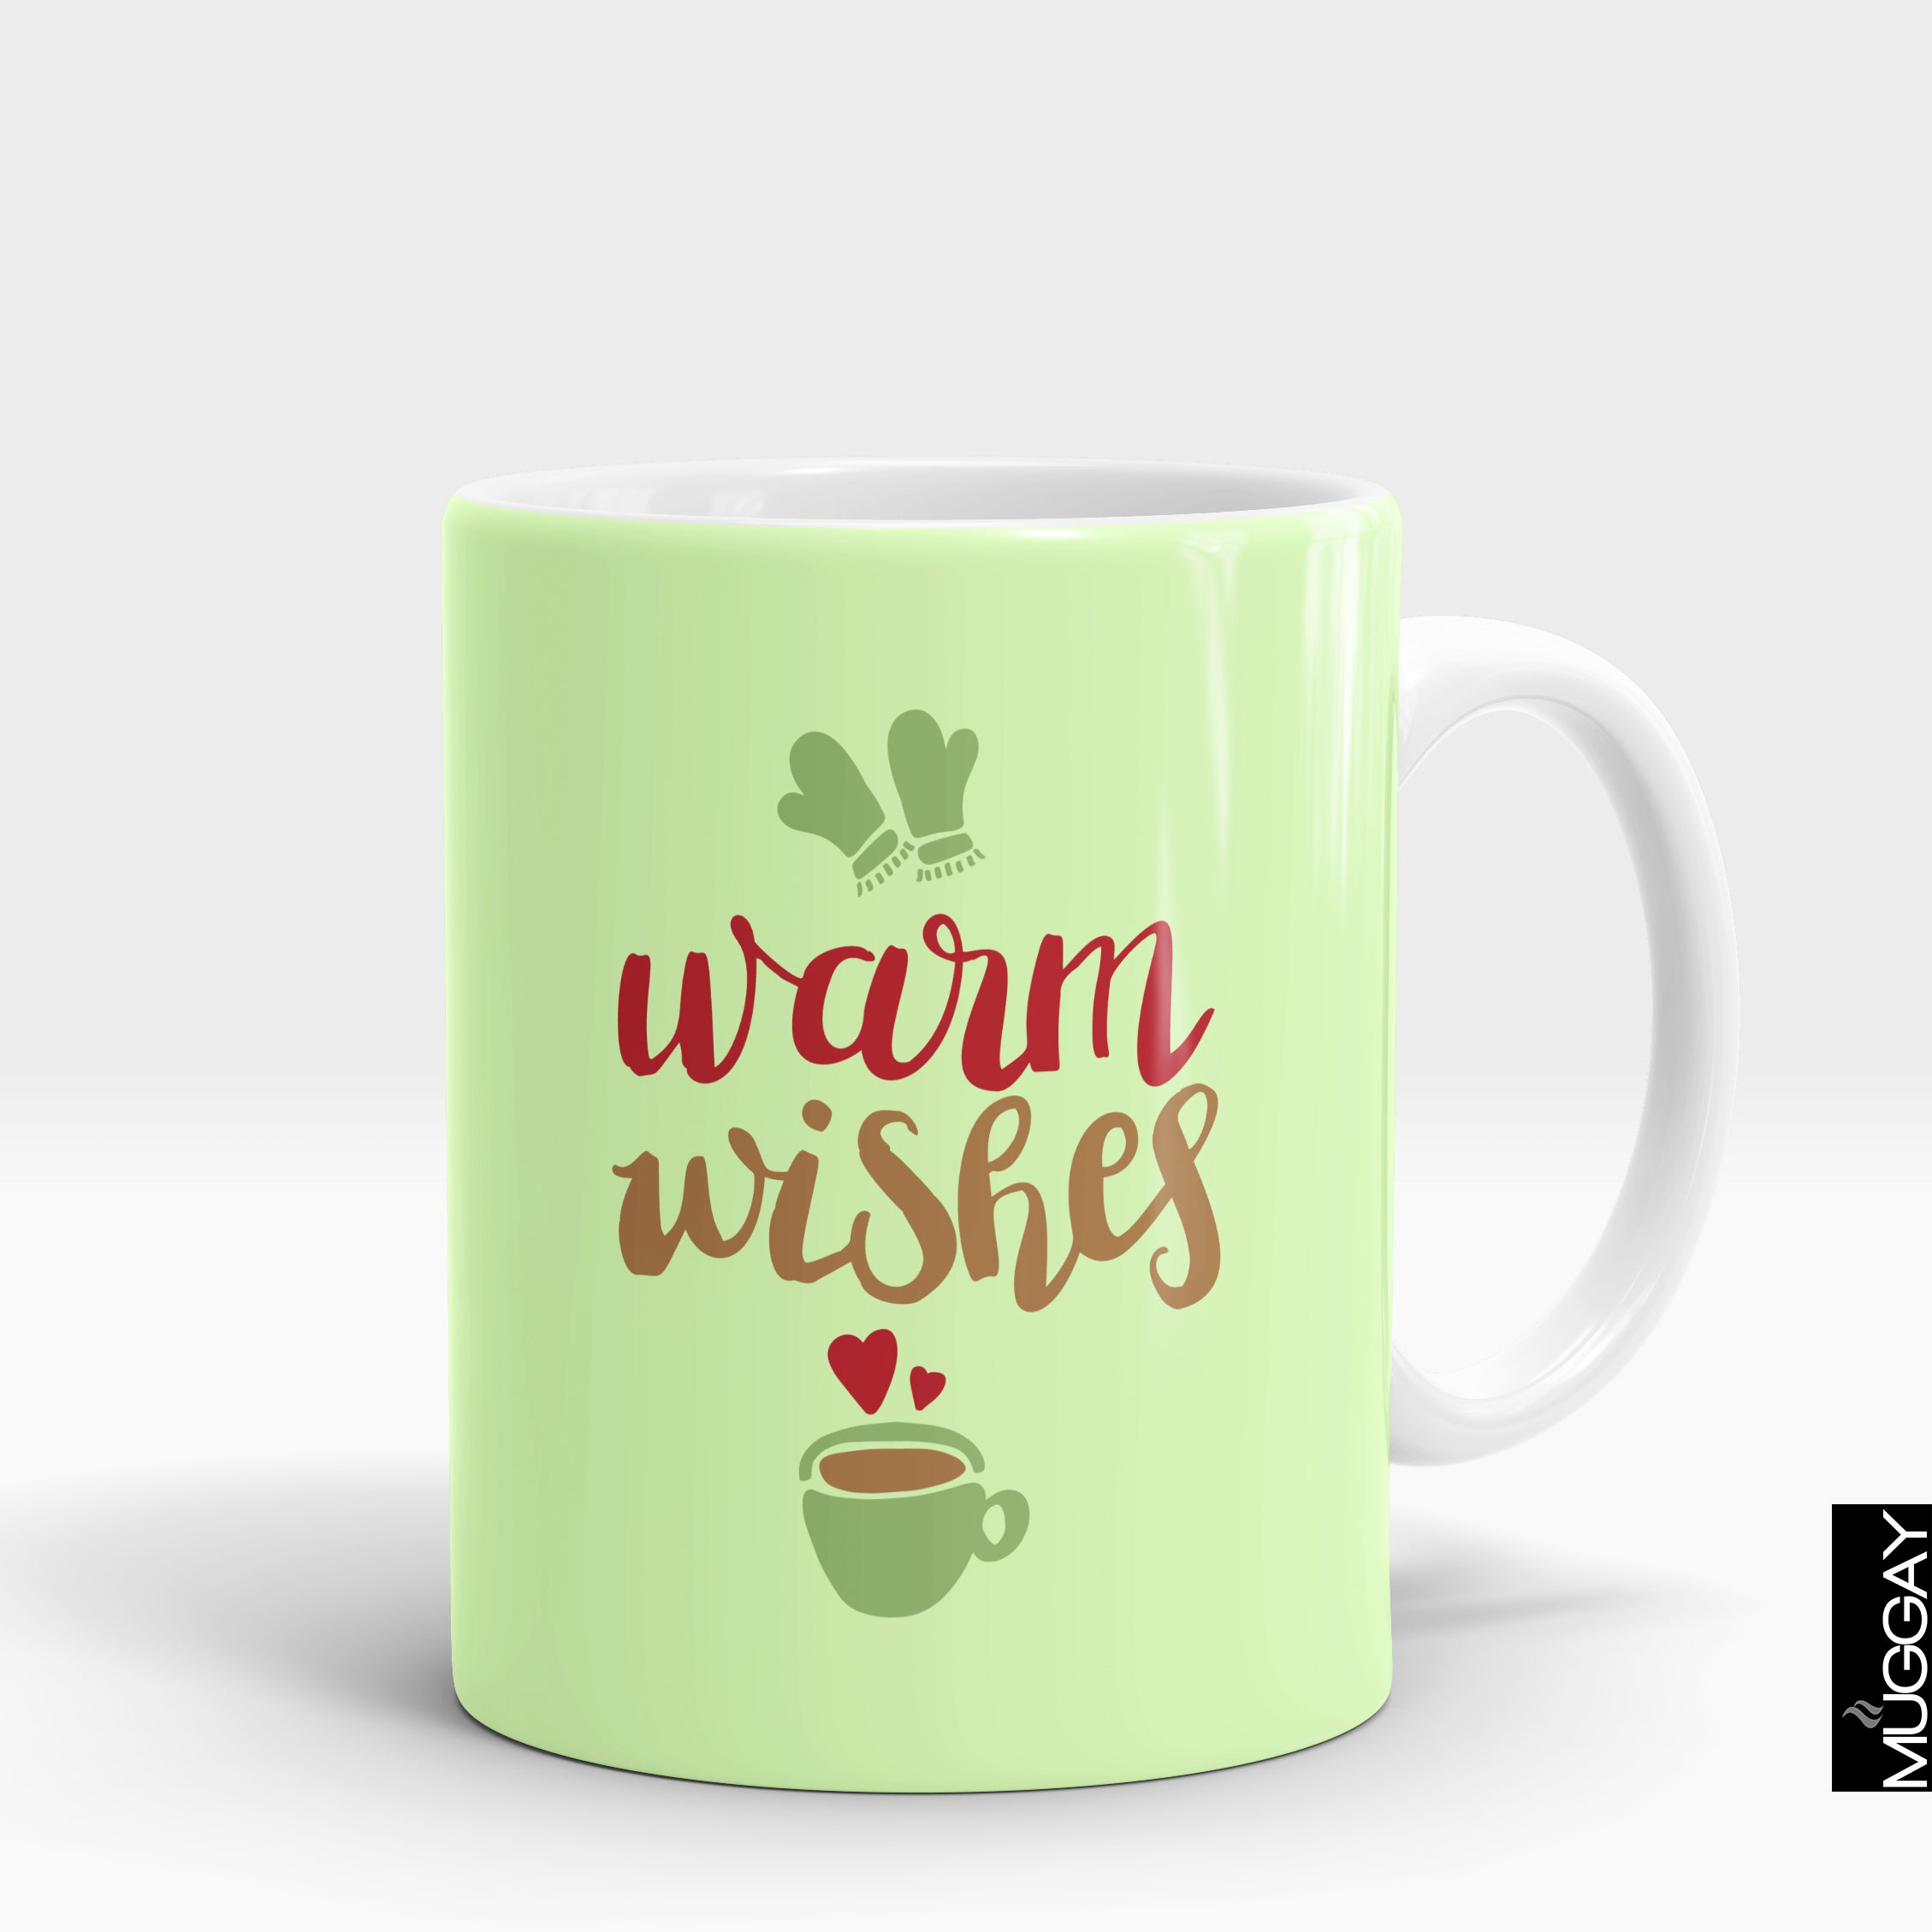 Warm wishes